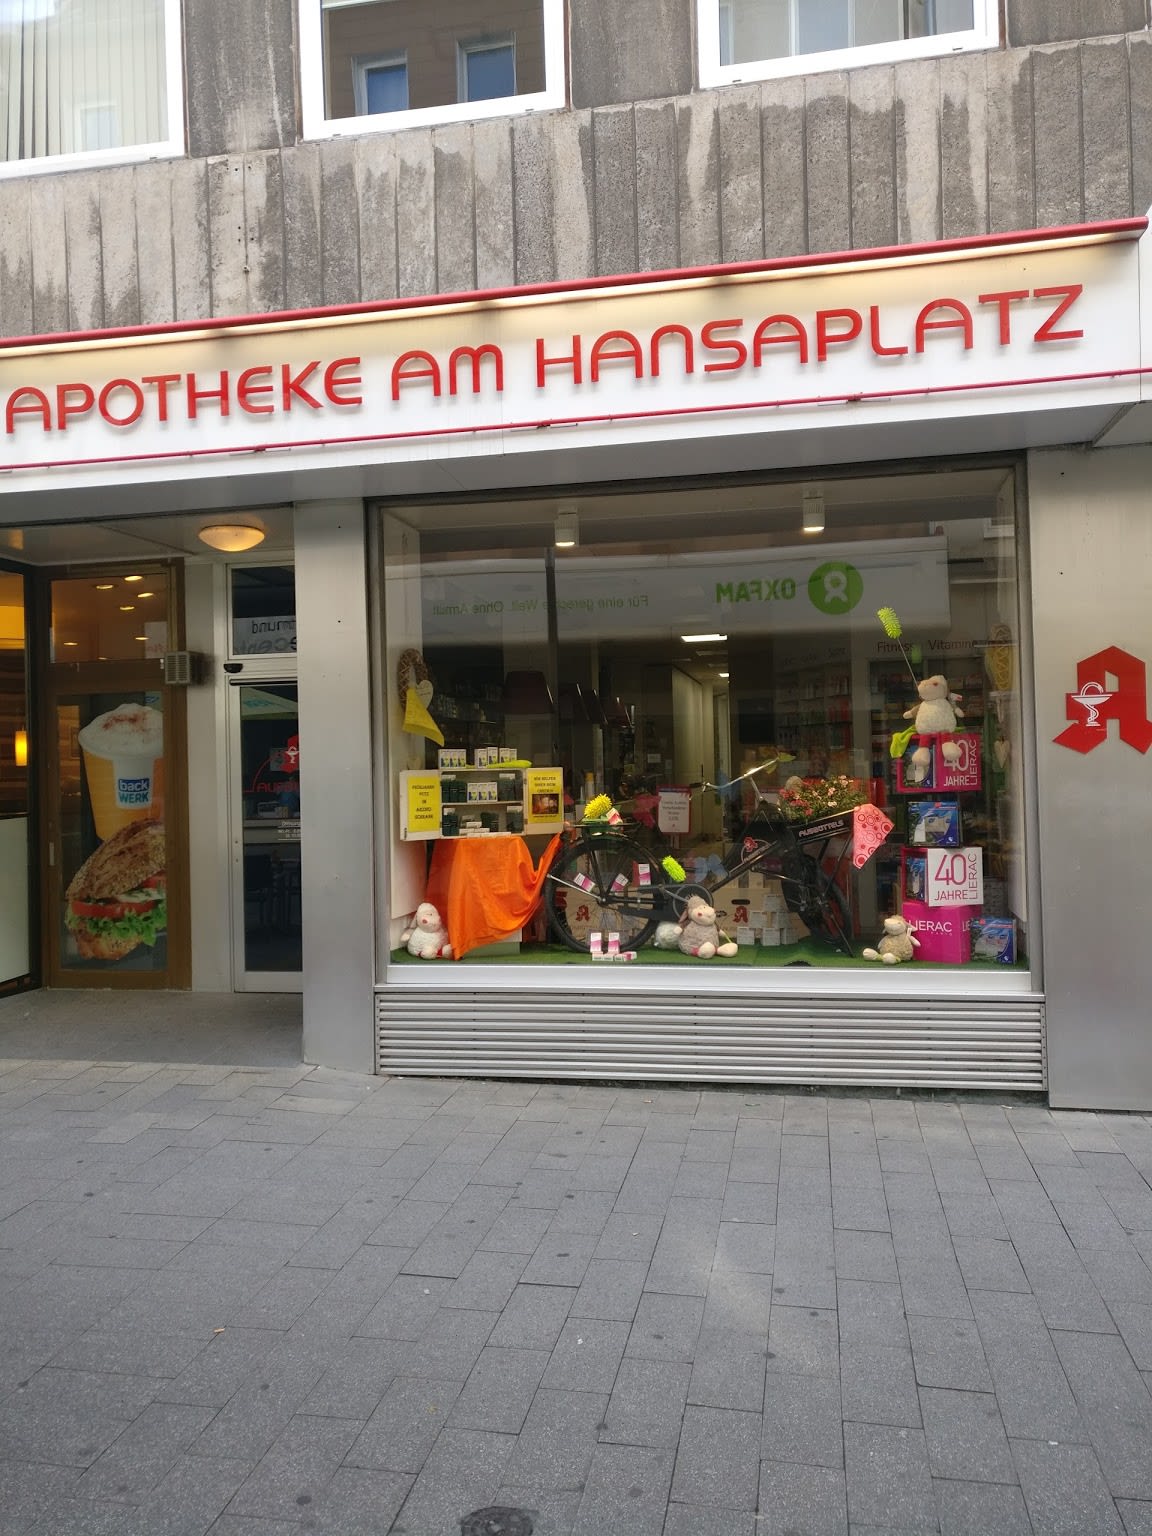 Apotheke am Hansaplatz